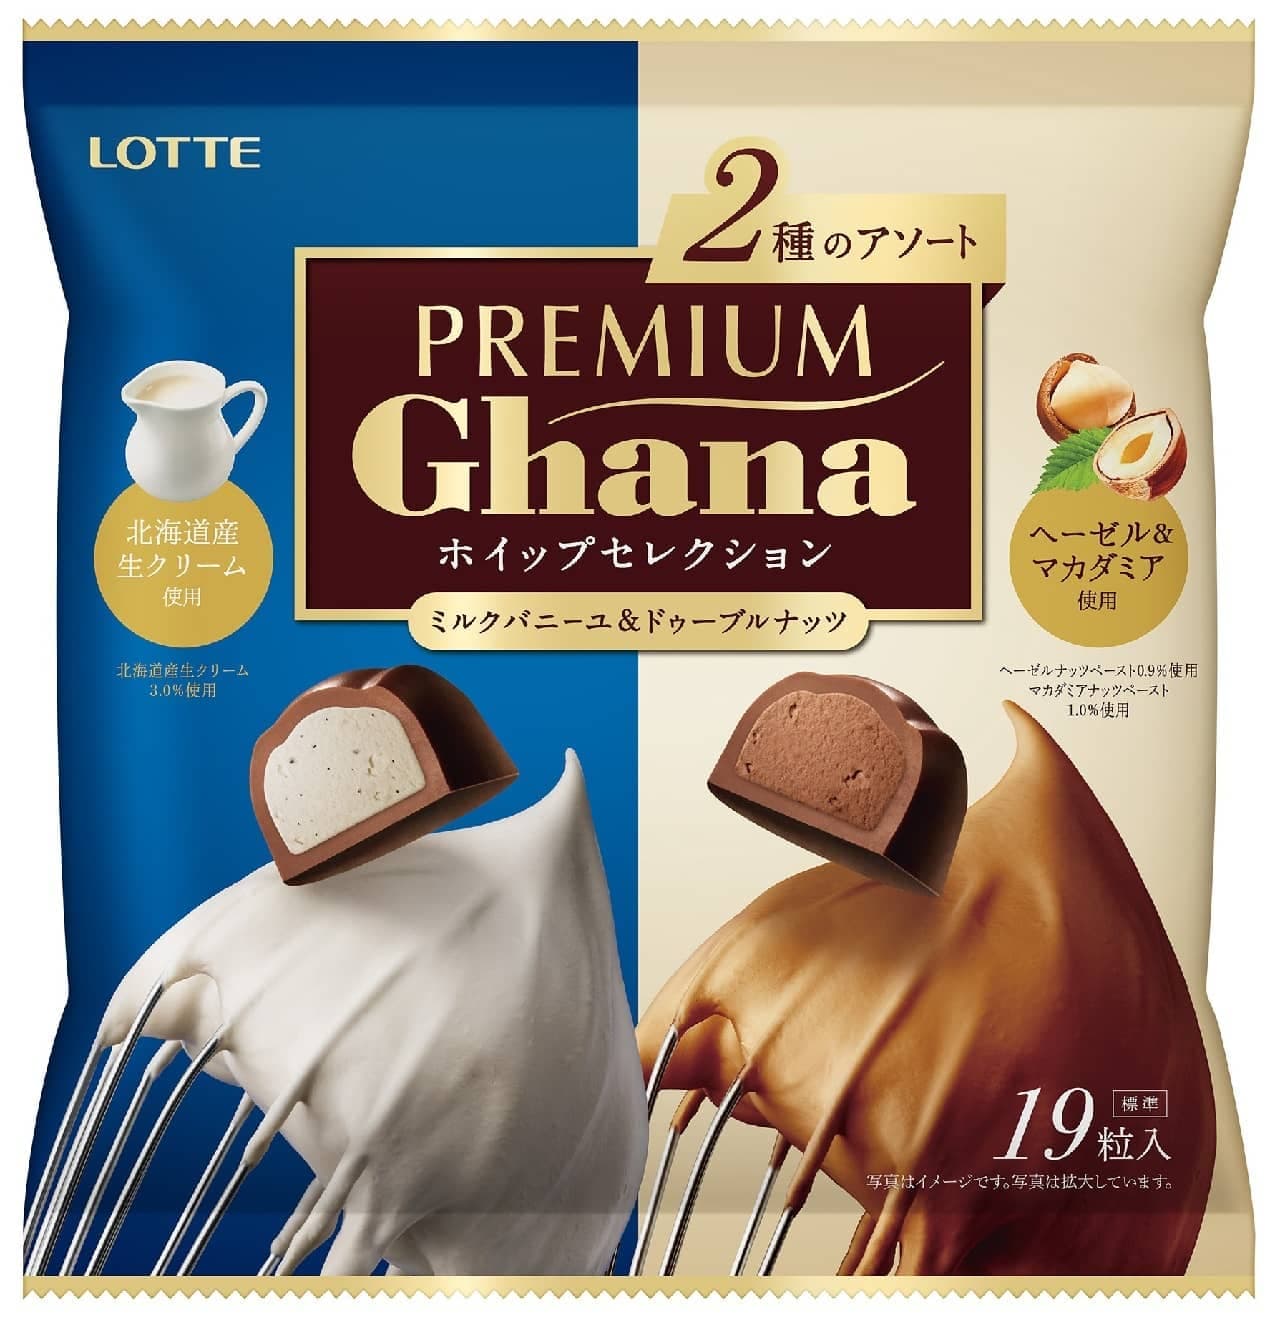 Lotte "Premium Ghana Whip Selection